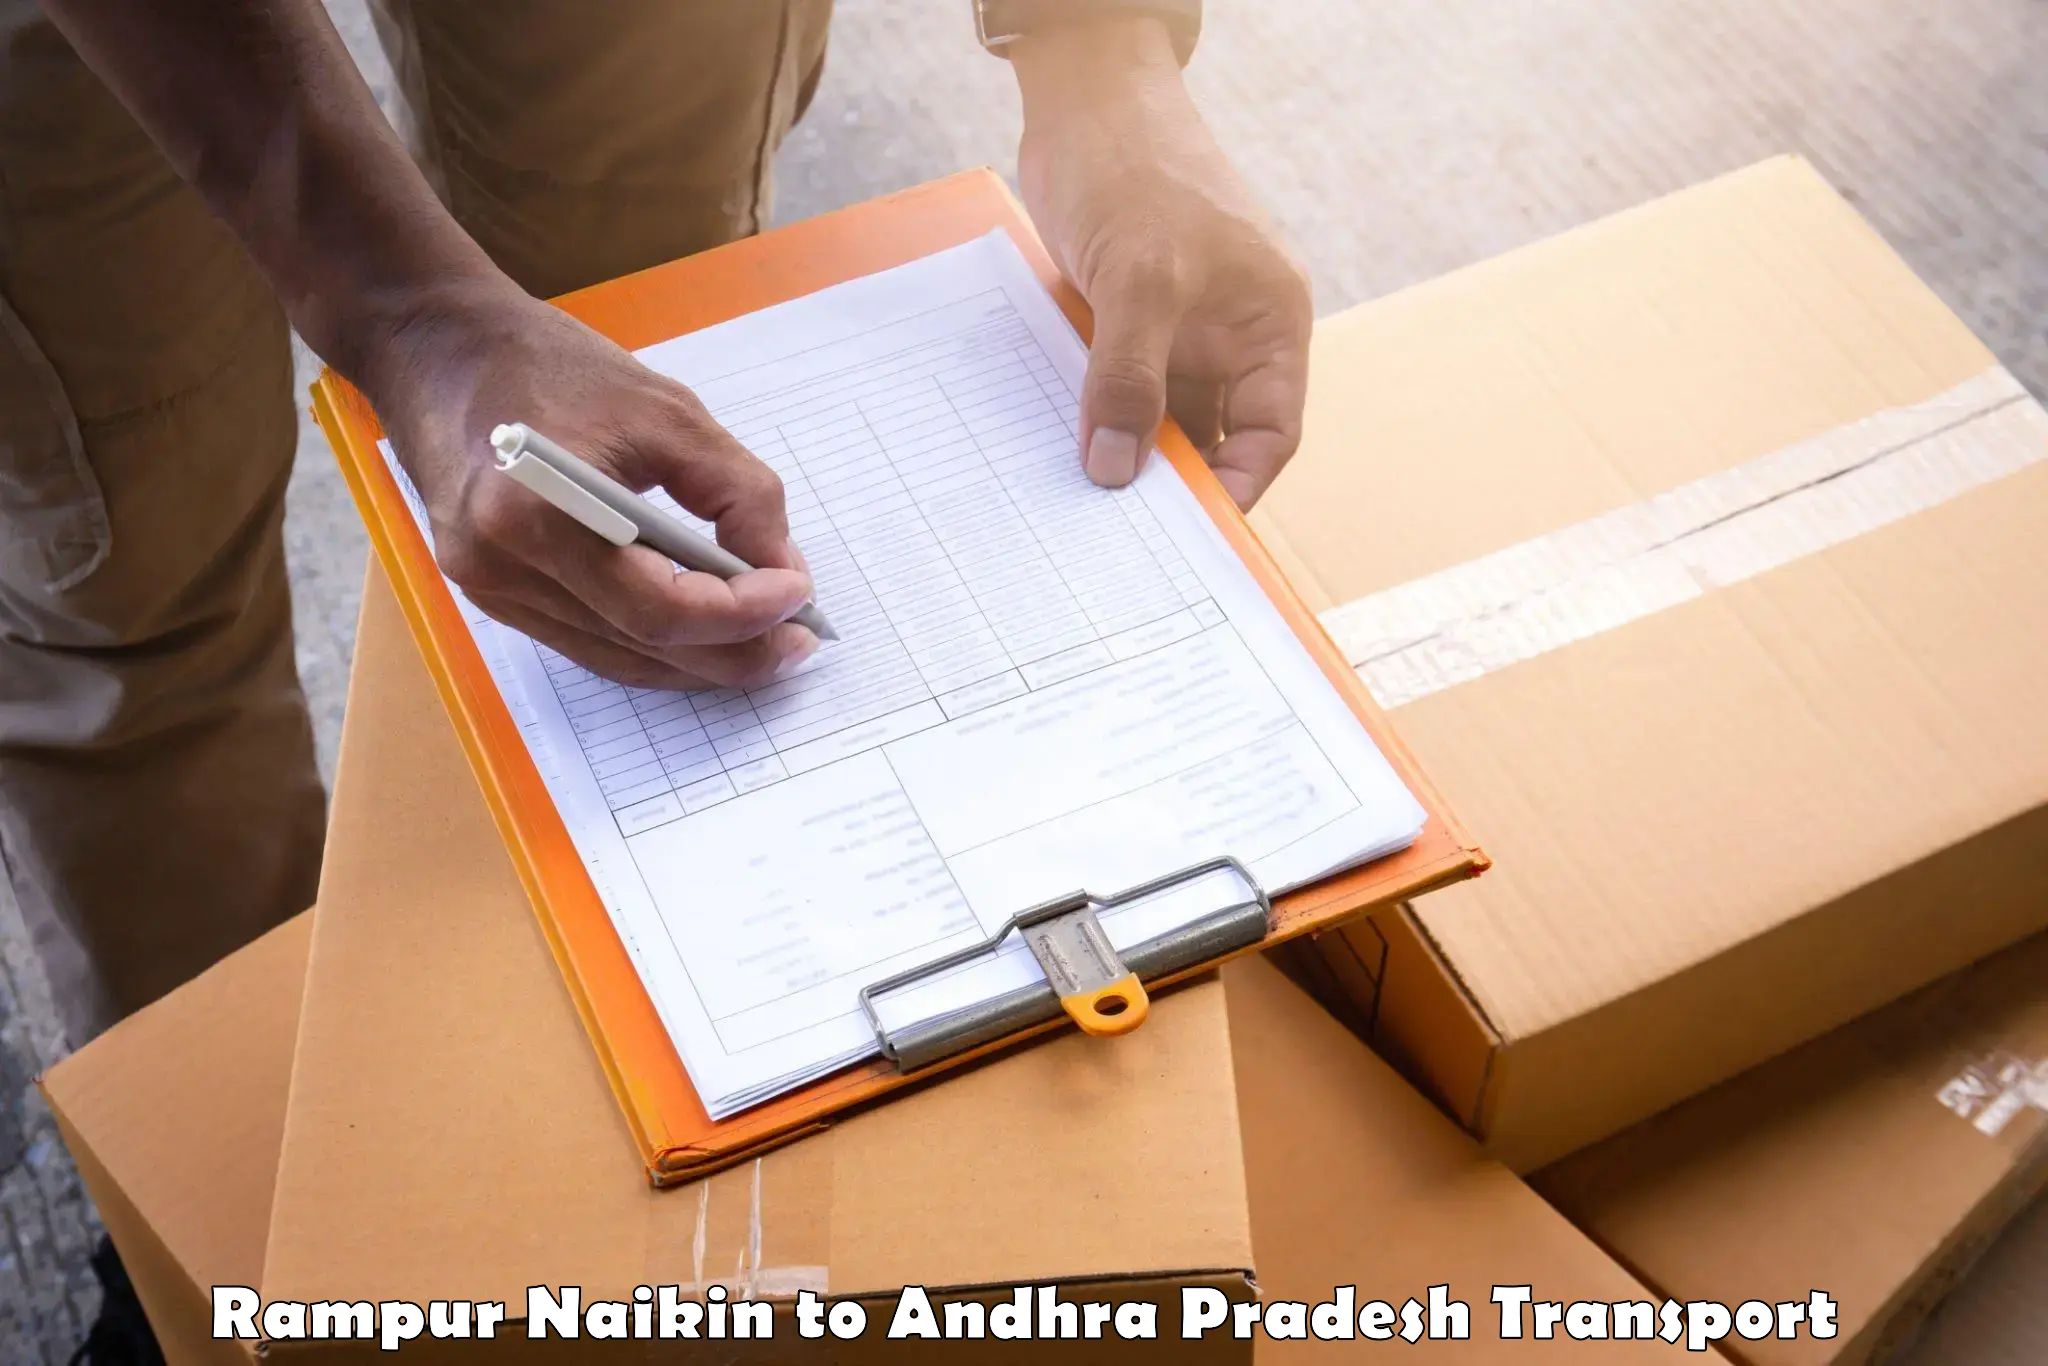 Furniture transport service Rampur Naikin to Madanapalle